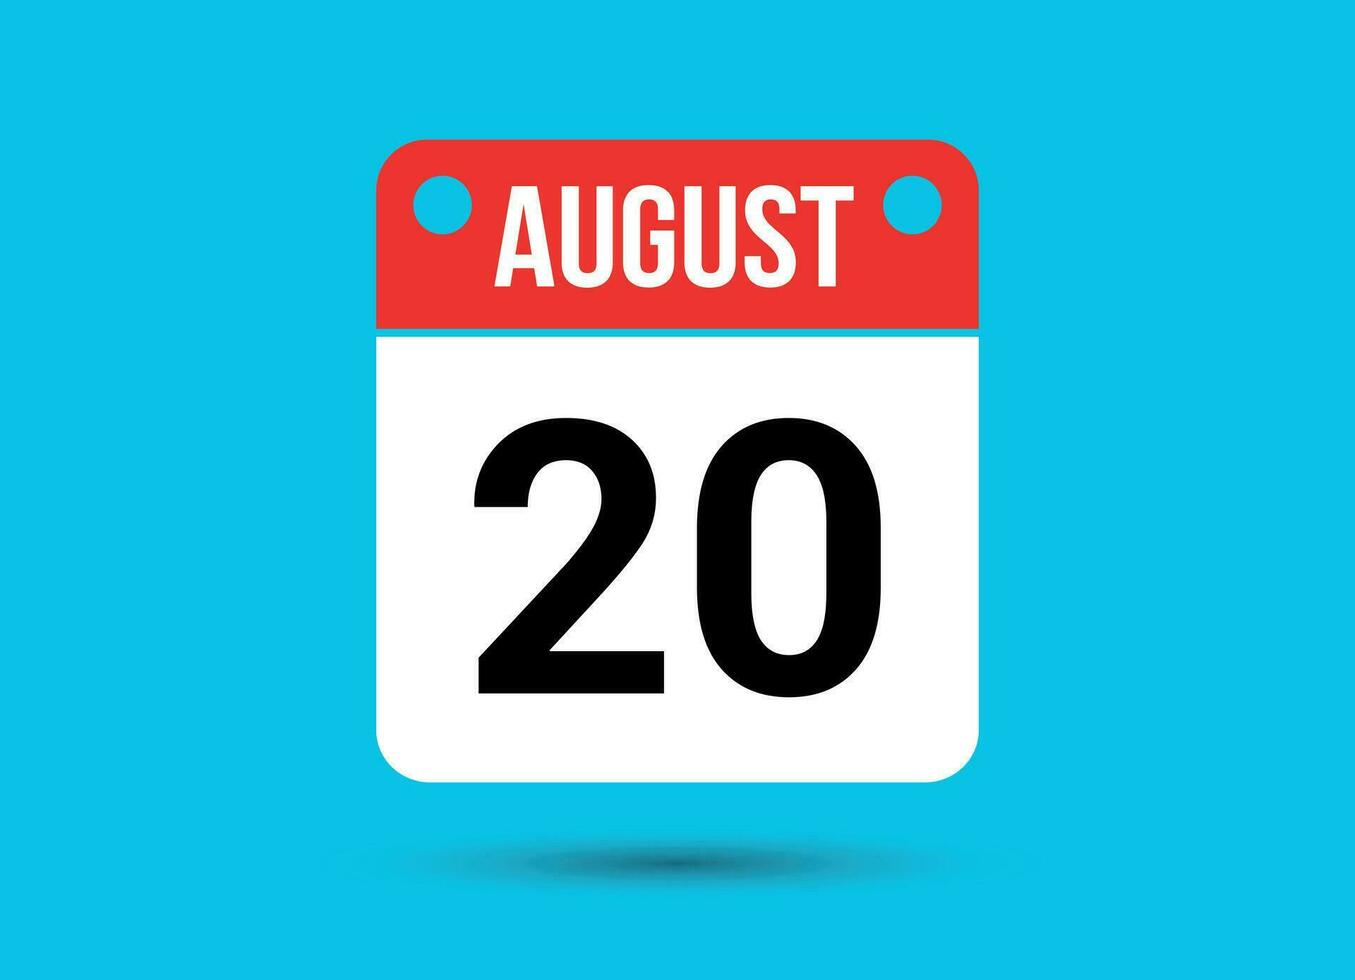 August 20 Kalender Datum eben Symbol Tag 20 Vektor Illustration